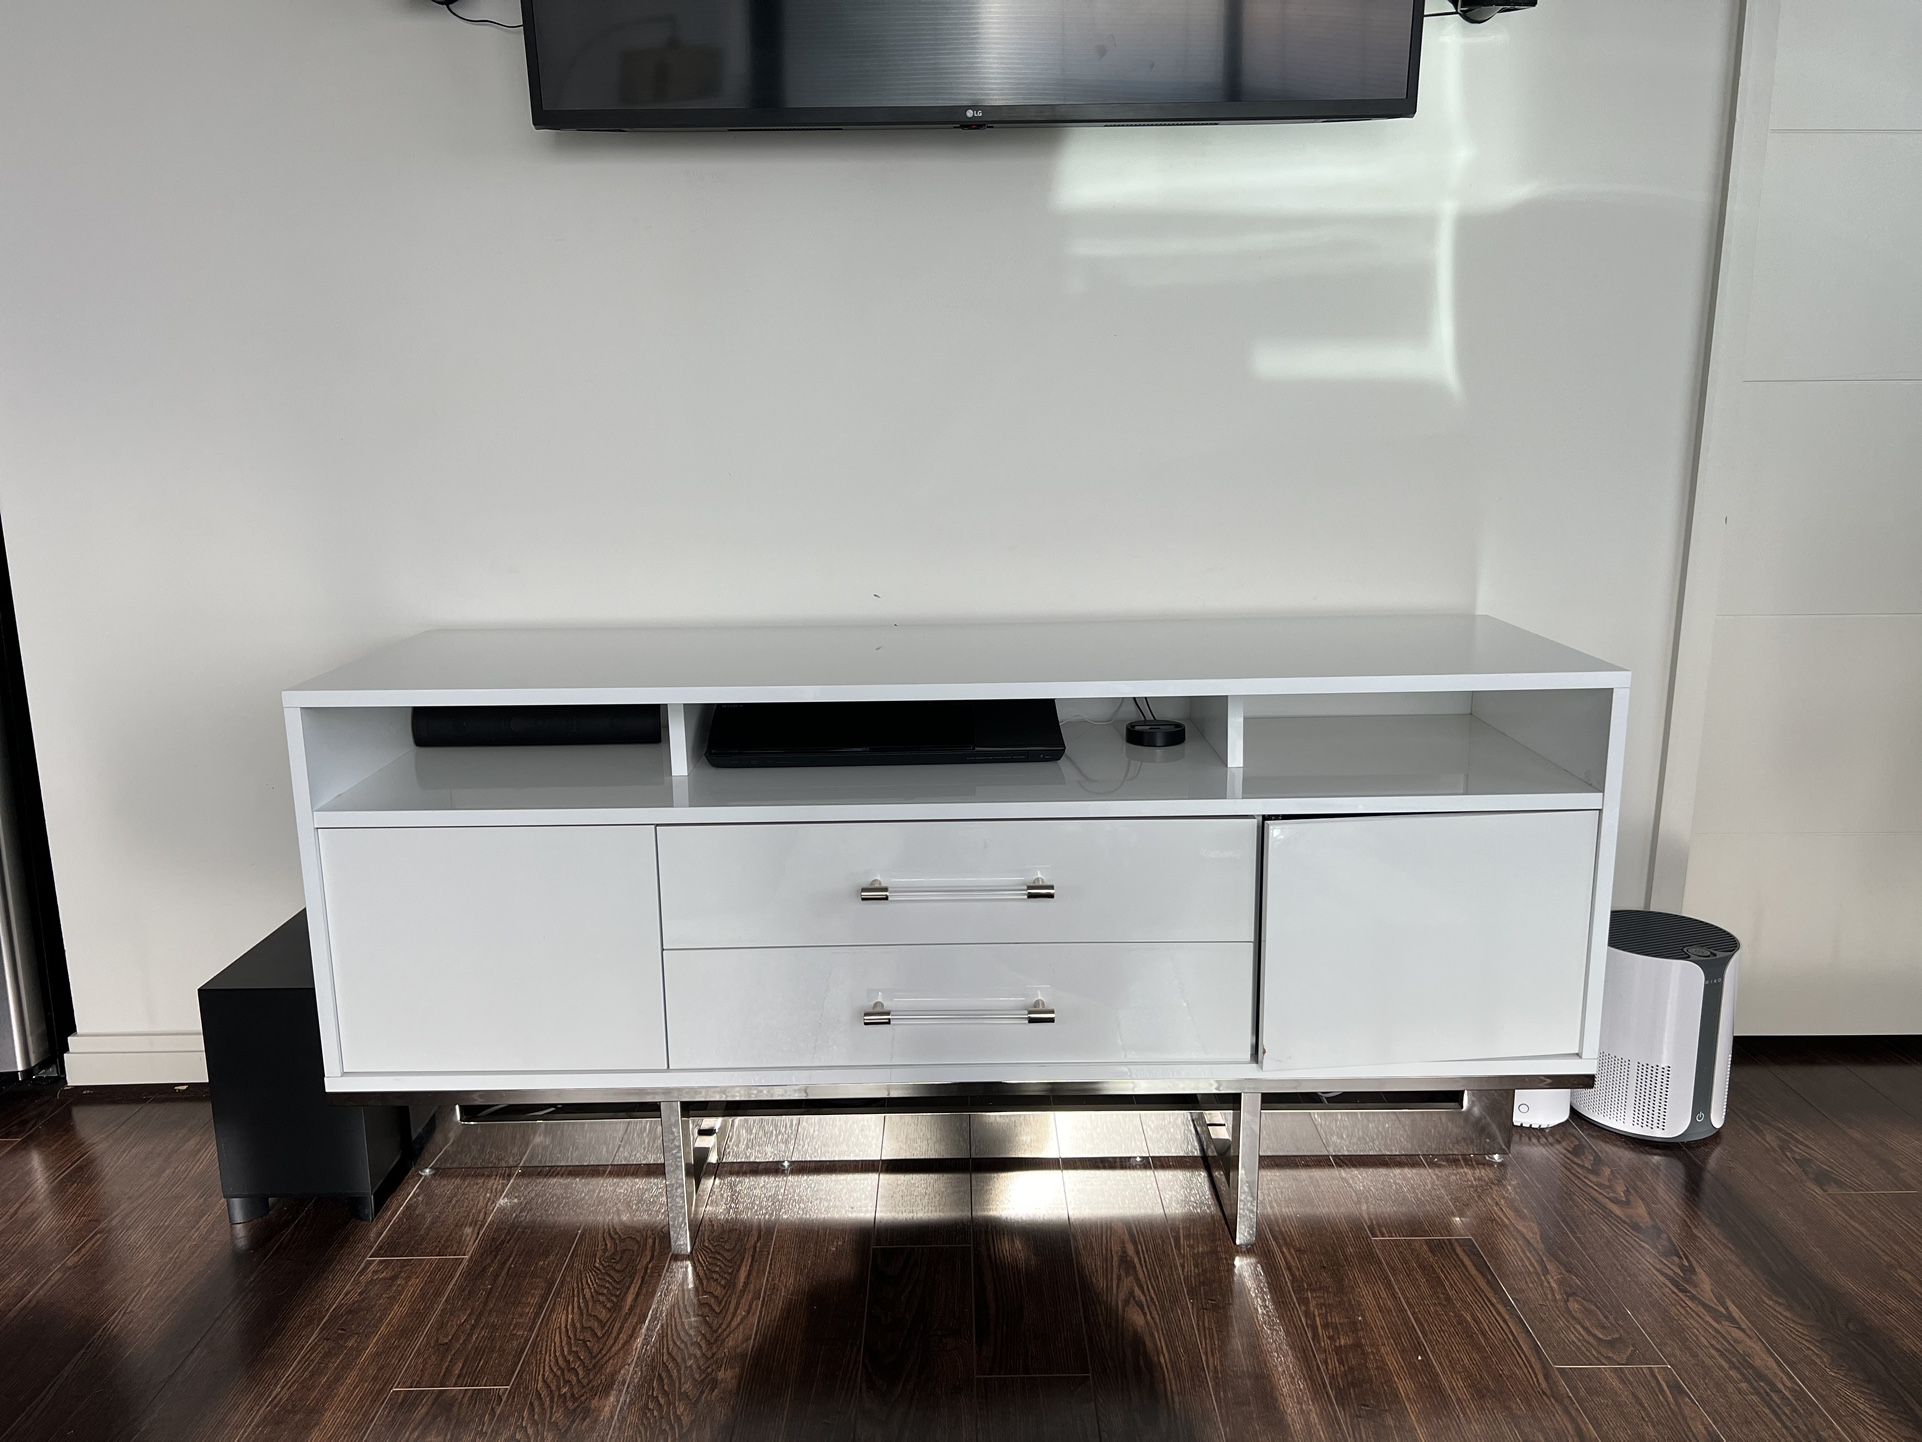 City Furniture TV Stand - $140 OBO